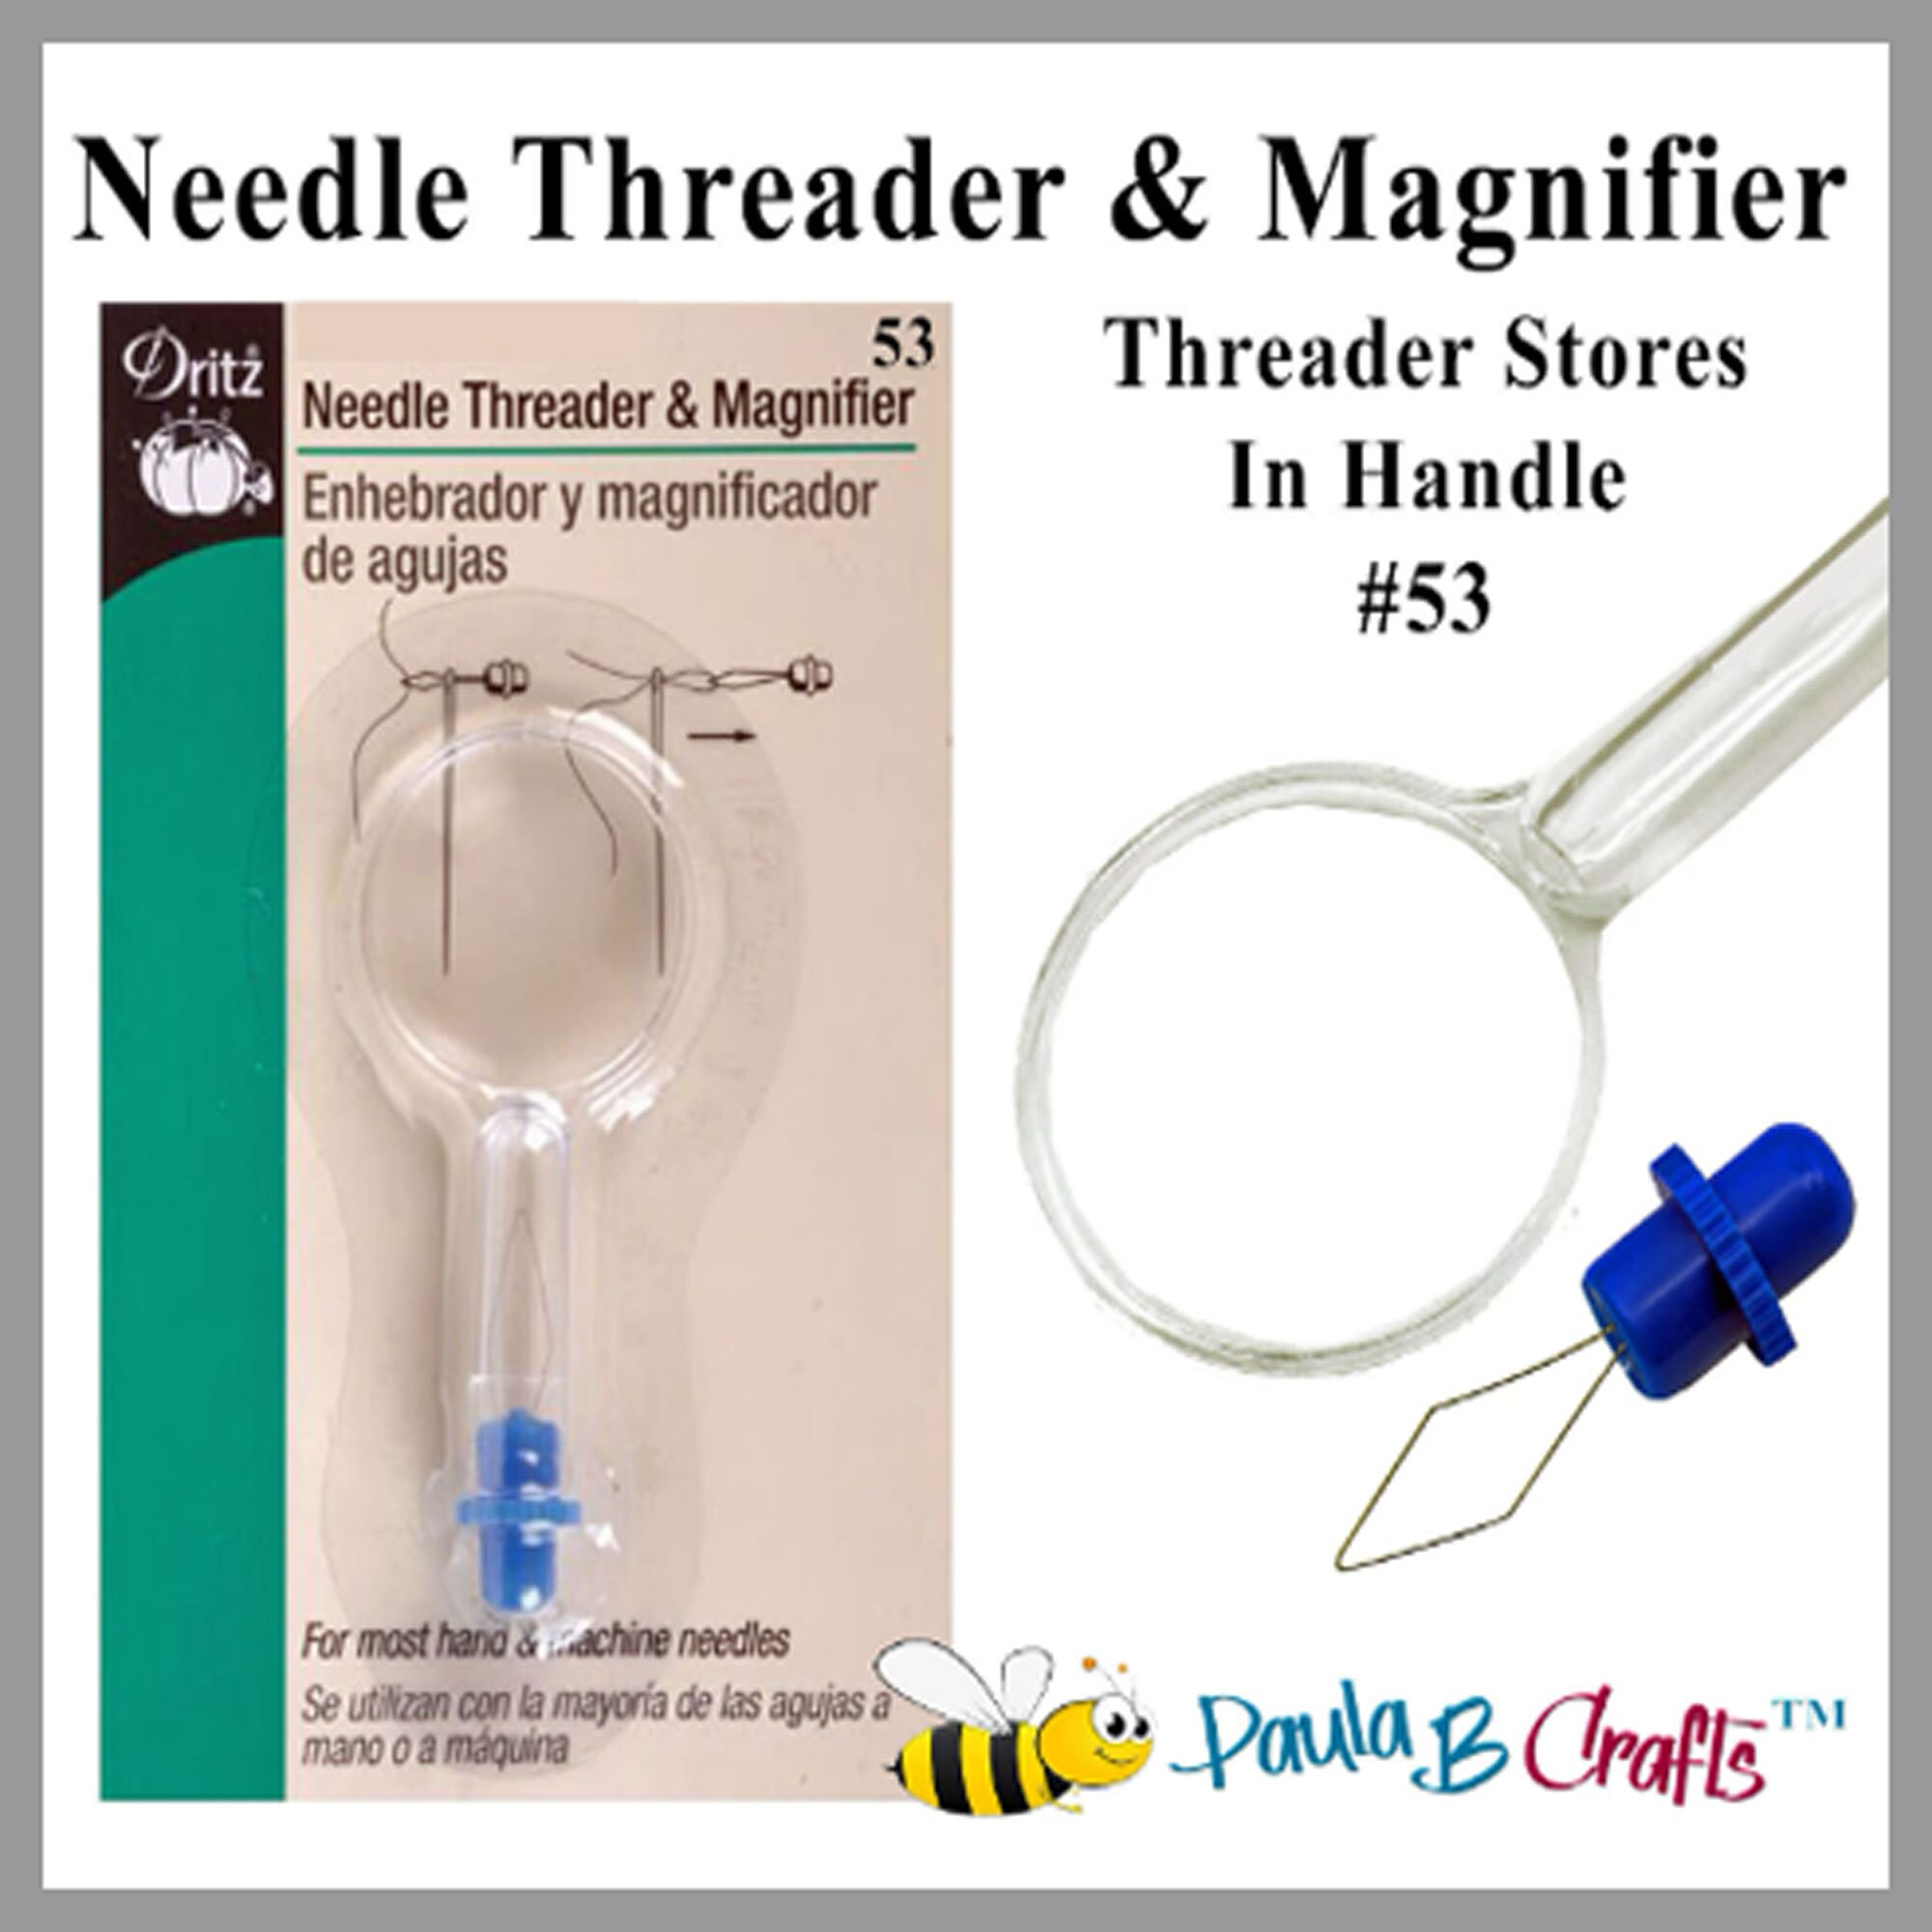 Dritz Needle Threader, 3 Count